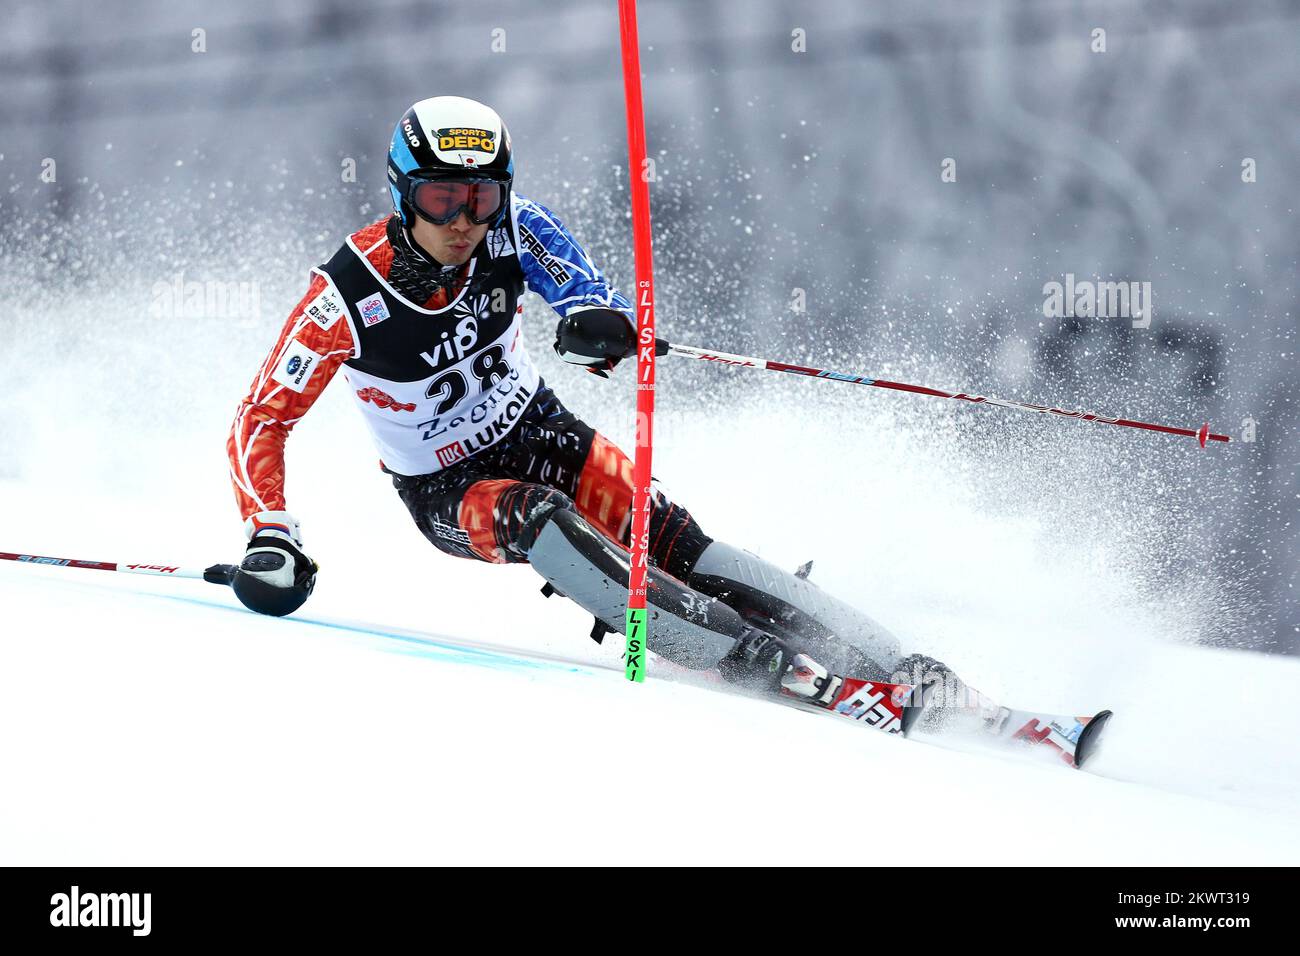 06.01.2015., Sljeme, Zagreb, Croatie - Trophée VIP Snow Queen, slalom masculin, première course.Naoki Yuasa. Photo: Goran Stanzl/PIXSELL Banque D'Images